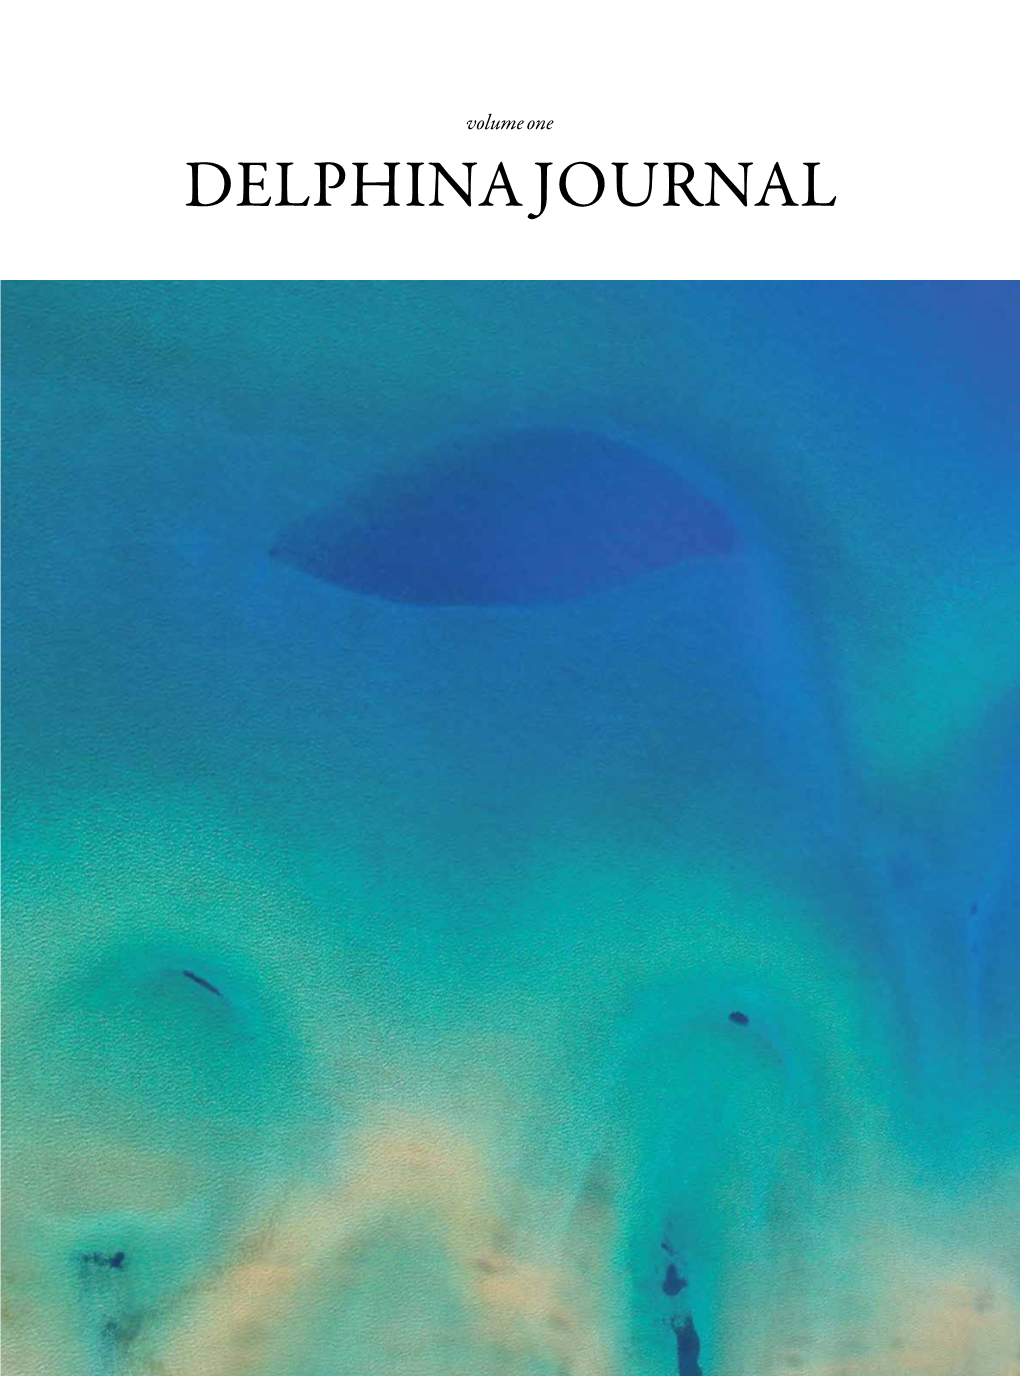 Delphina Journal NOI GALLURESI 1 5 STELLE